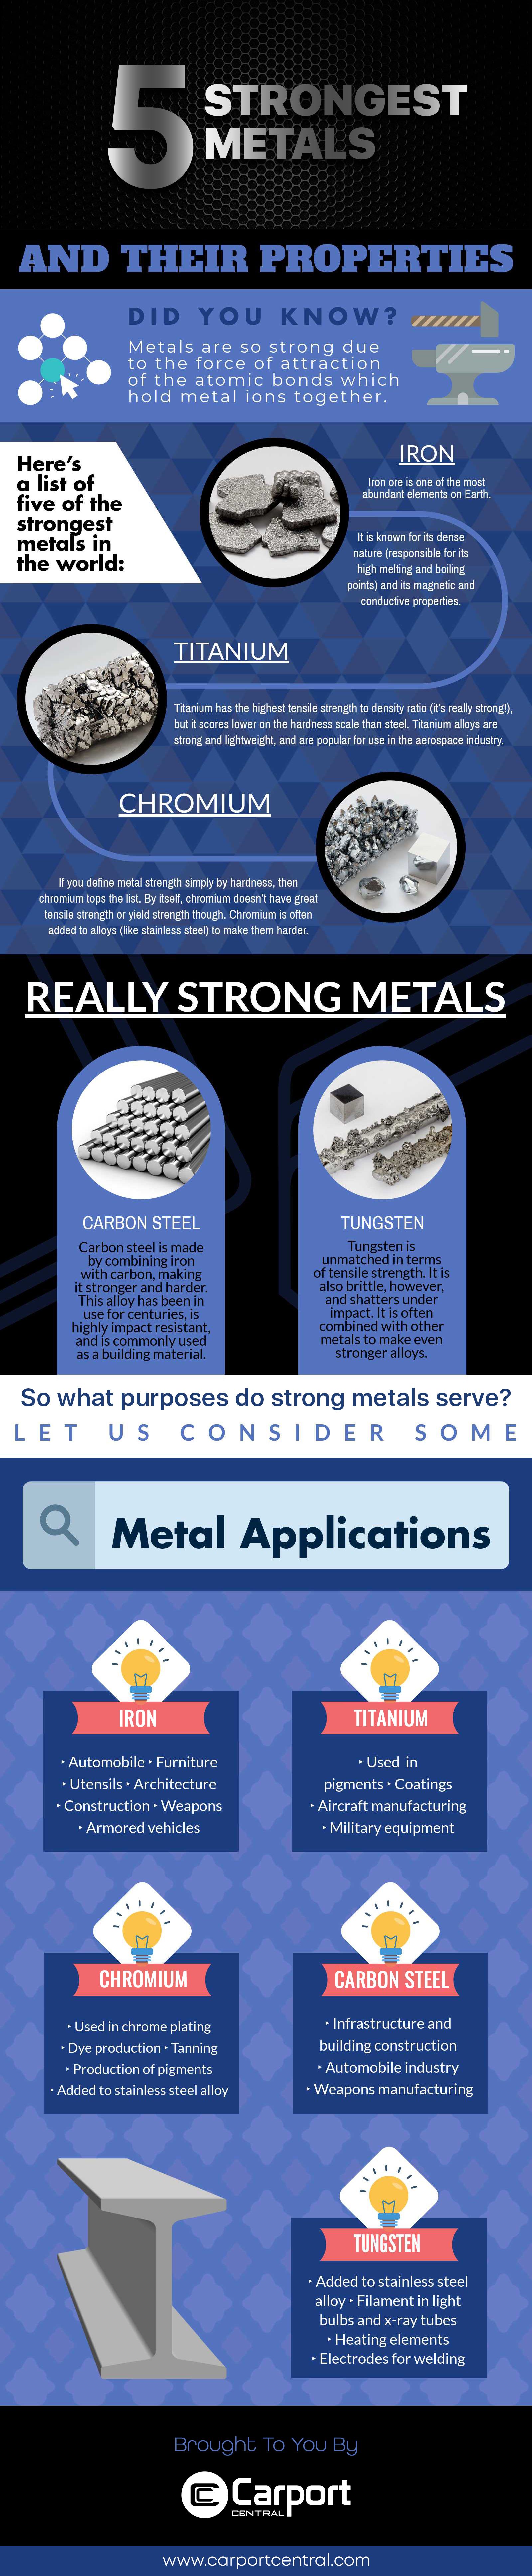 Top Five Strongest Metals and Their Properties